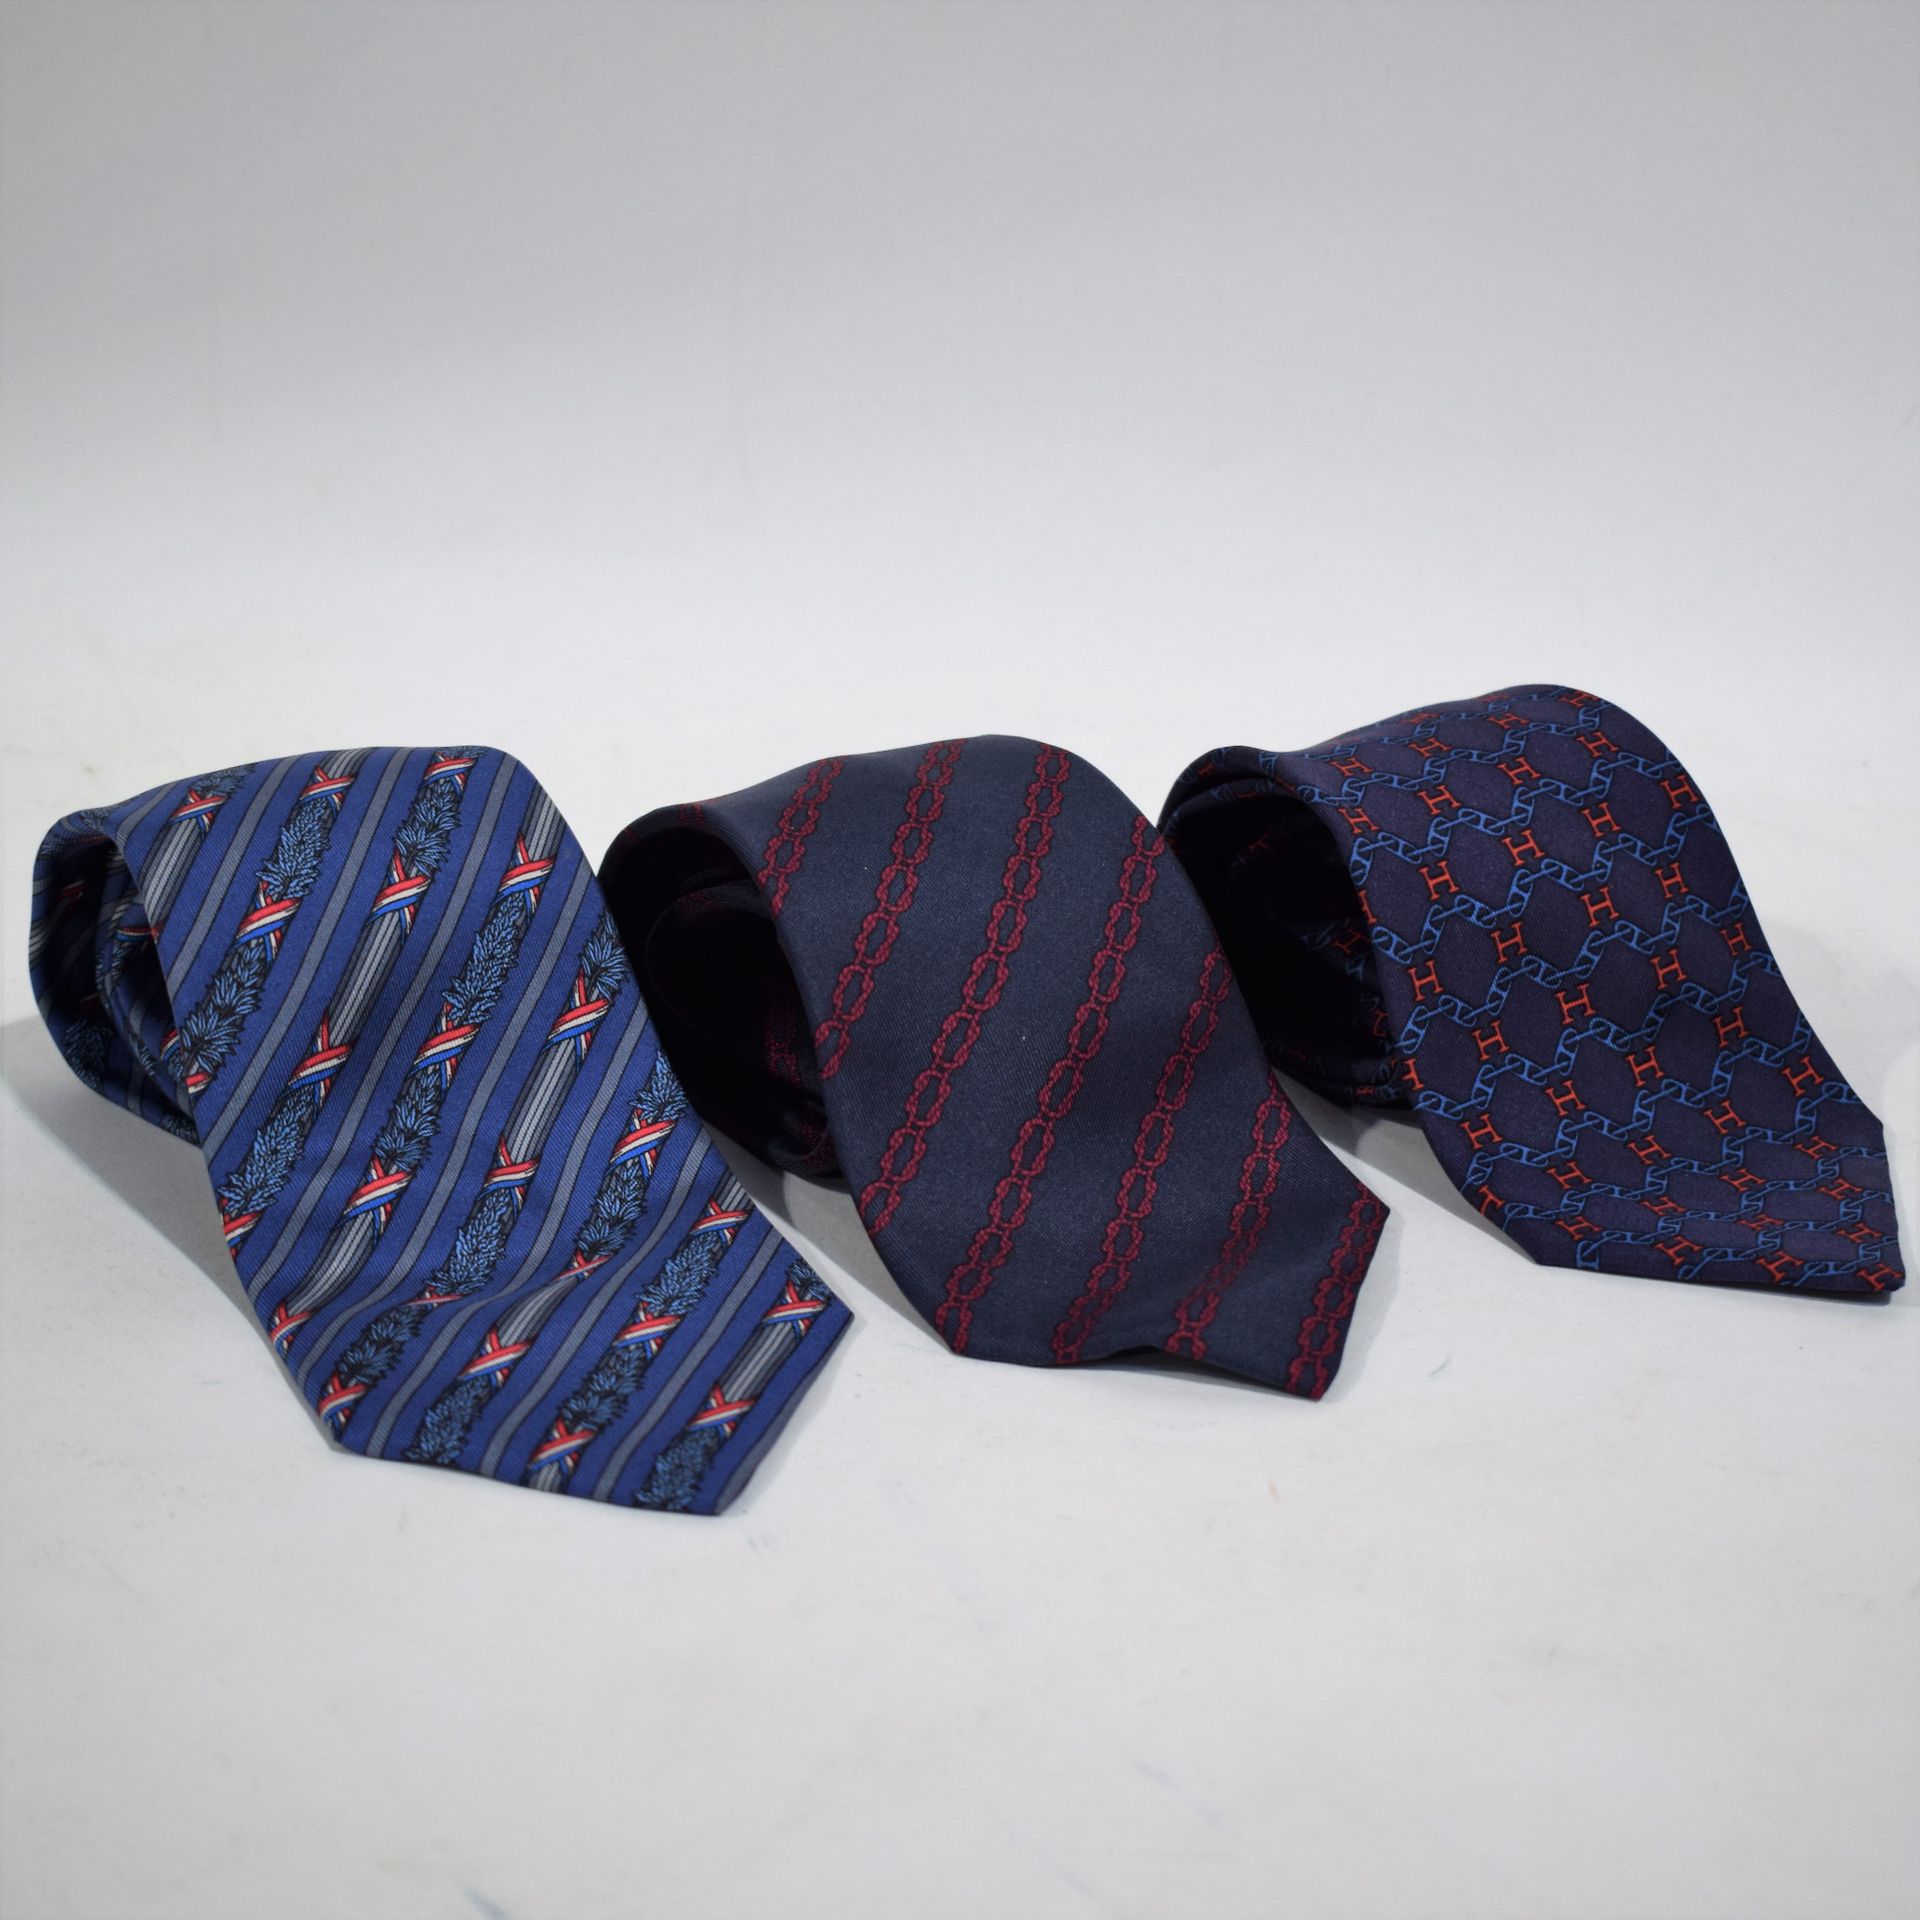 Null (HERMES) Set of 3 HERMES ties, blue and red colors, 100% silk